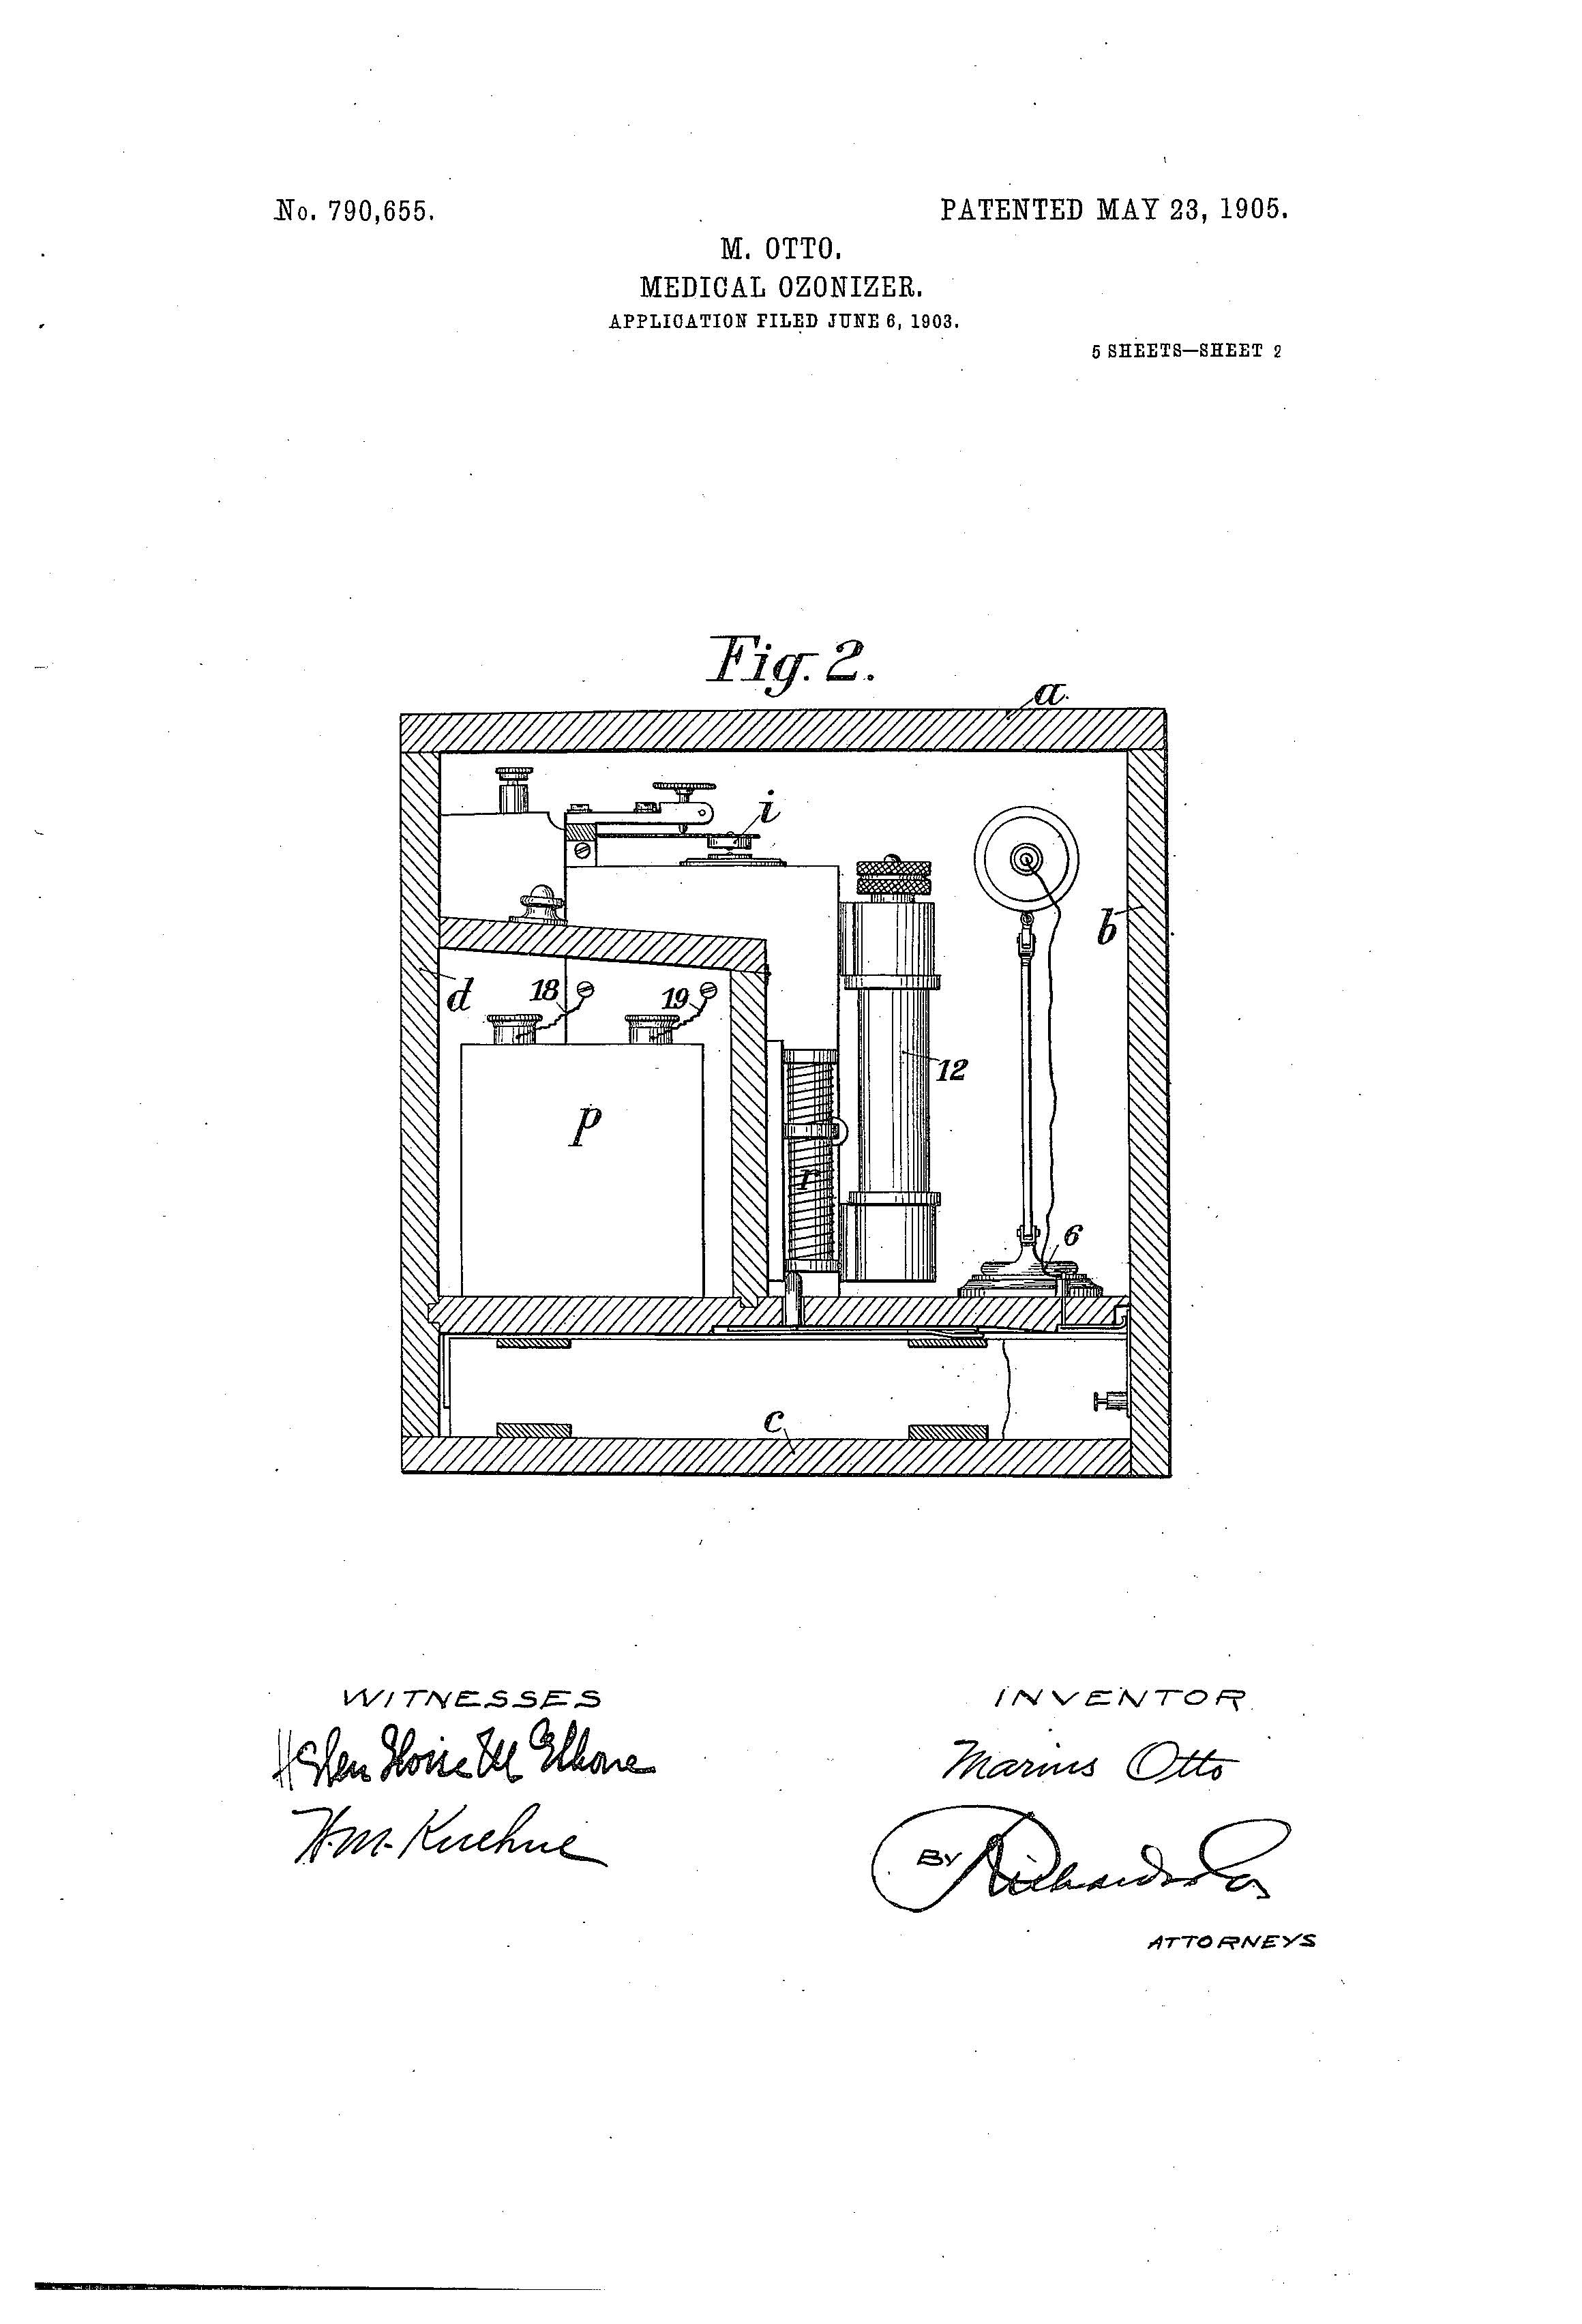 Patent-Illustration-Medical-Ozonizer_Page_2